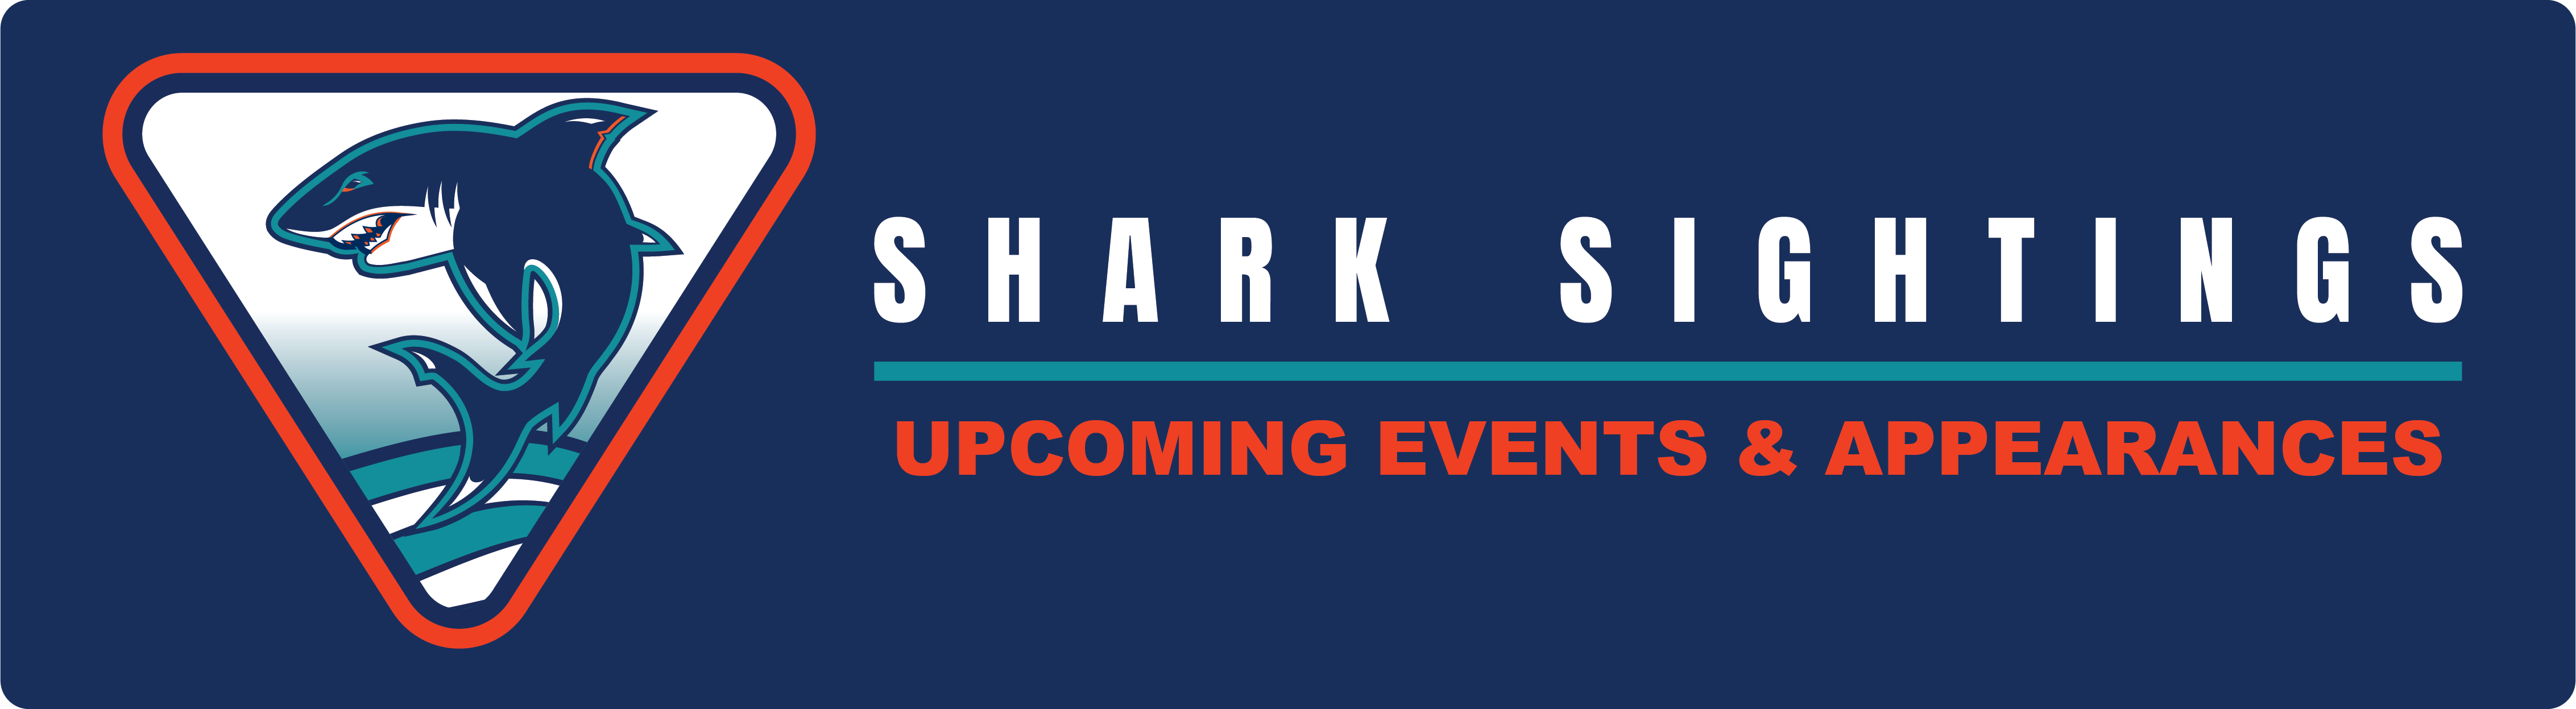 Shark Sightings Upcoming Events